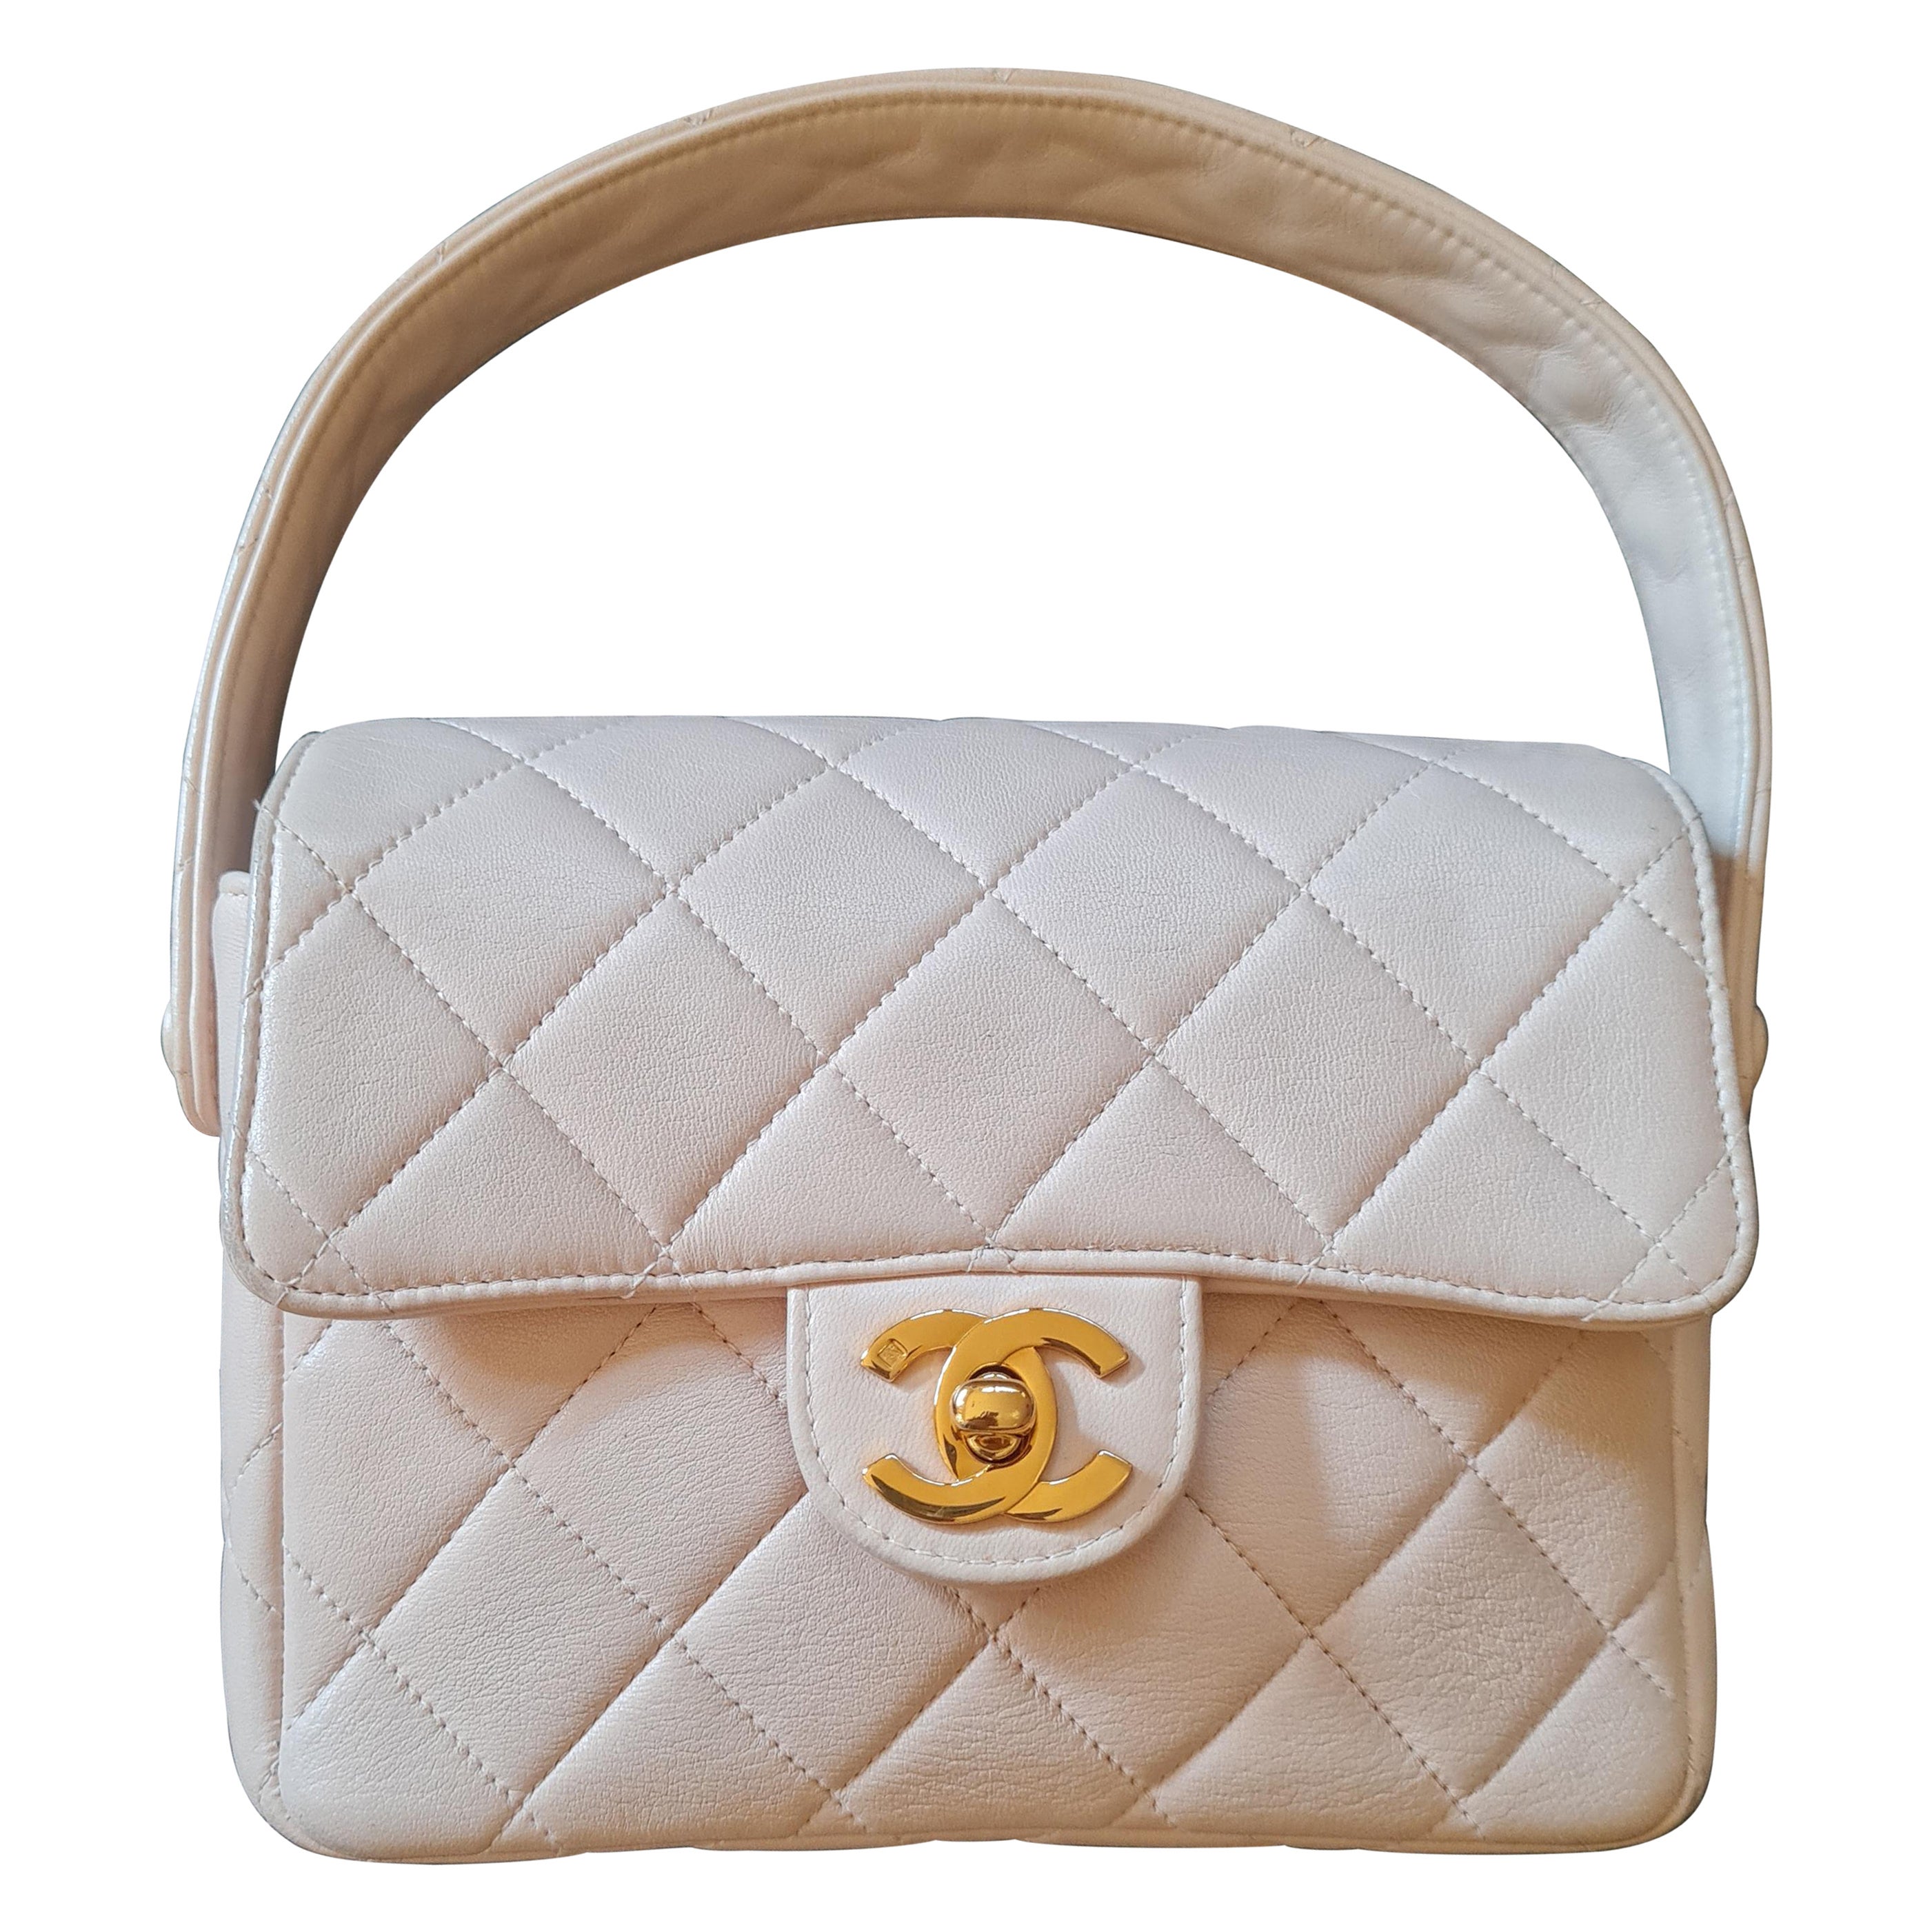 Chanel Mini Kelly Top Handle Bag - 9 For Sale on 1stDibs